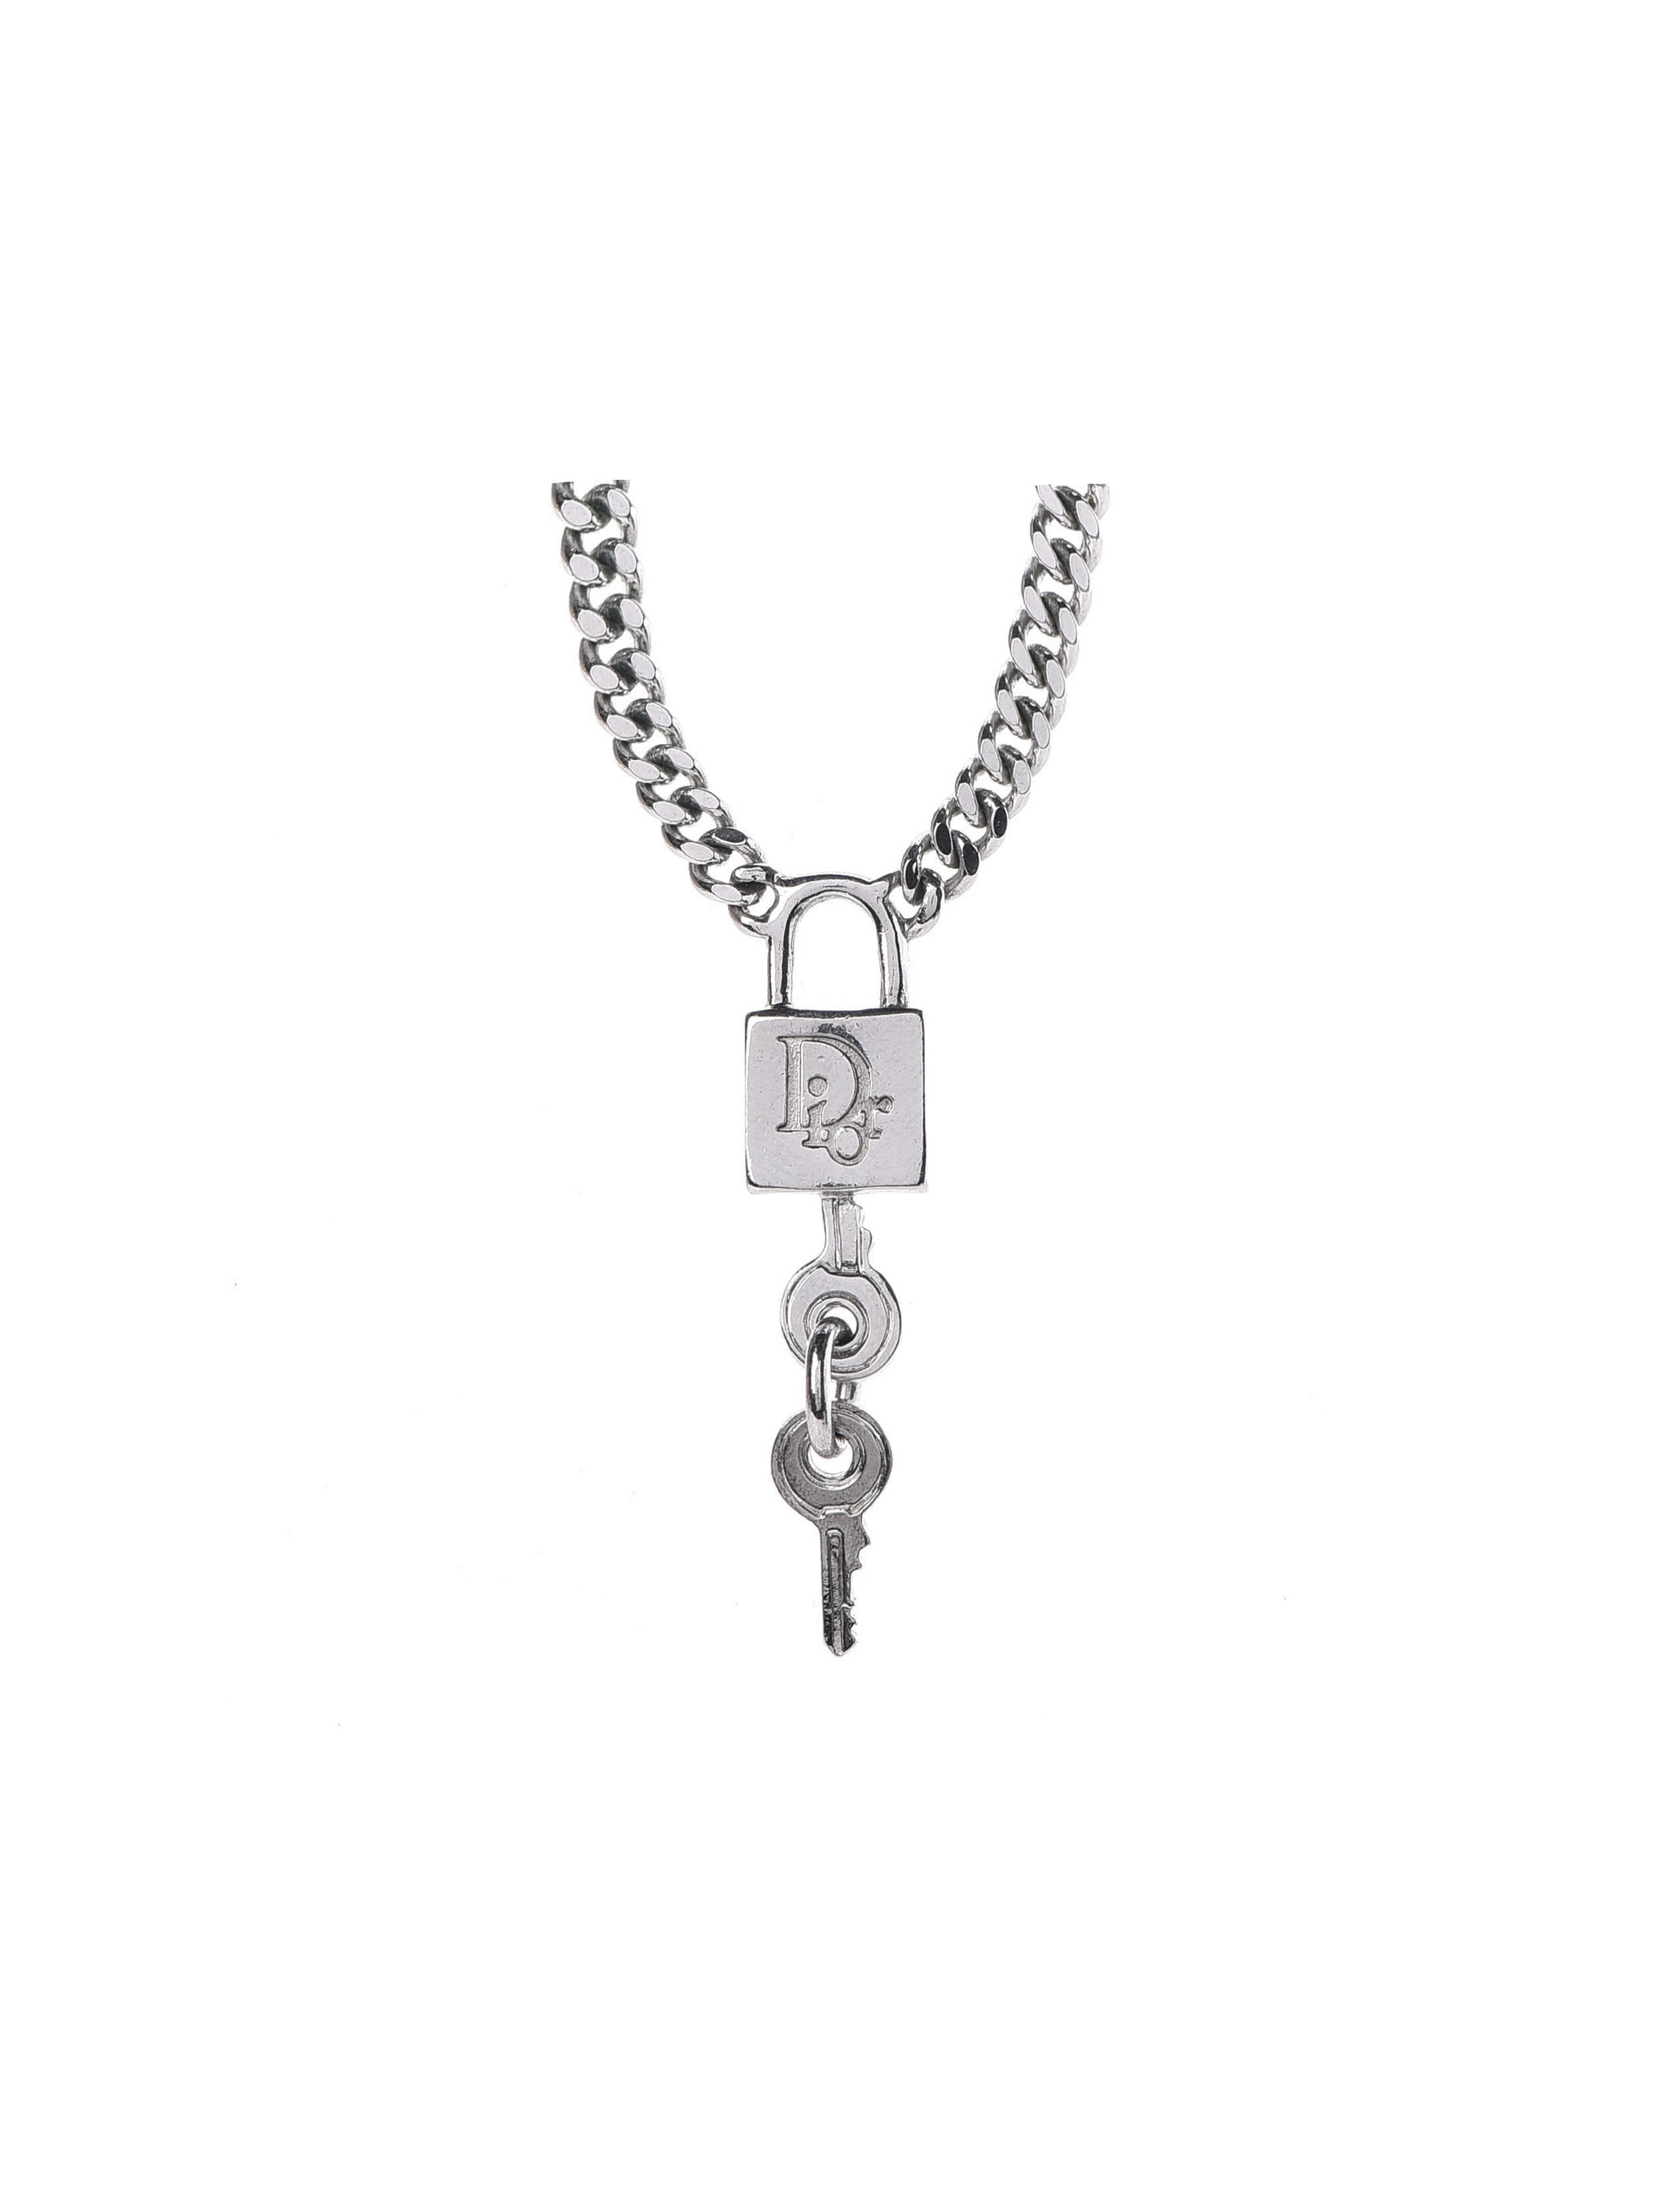 padlock necklace dior